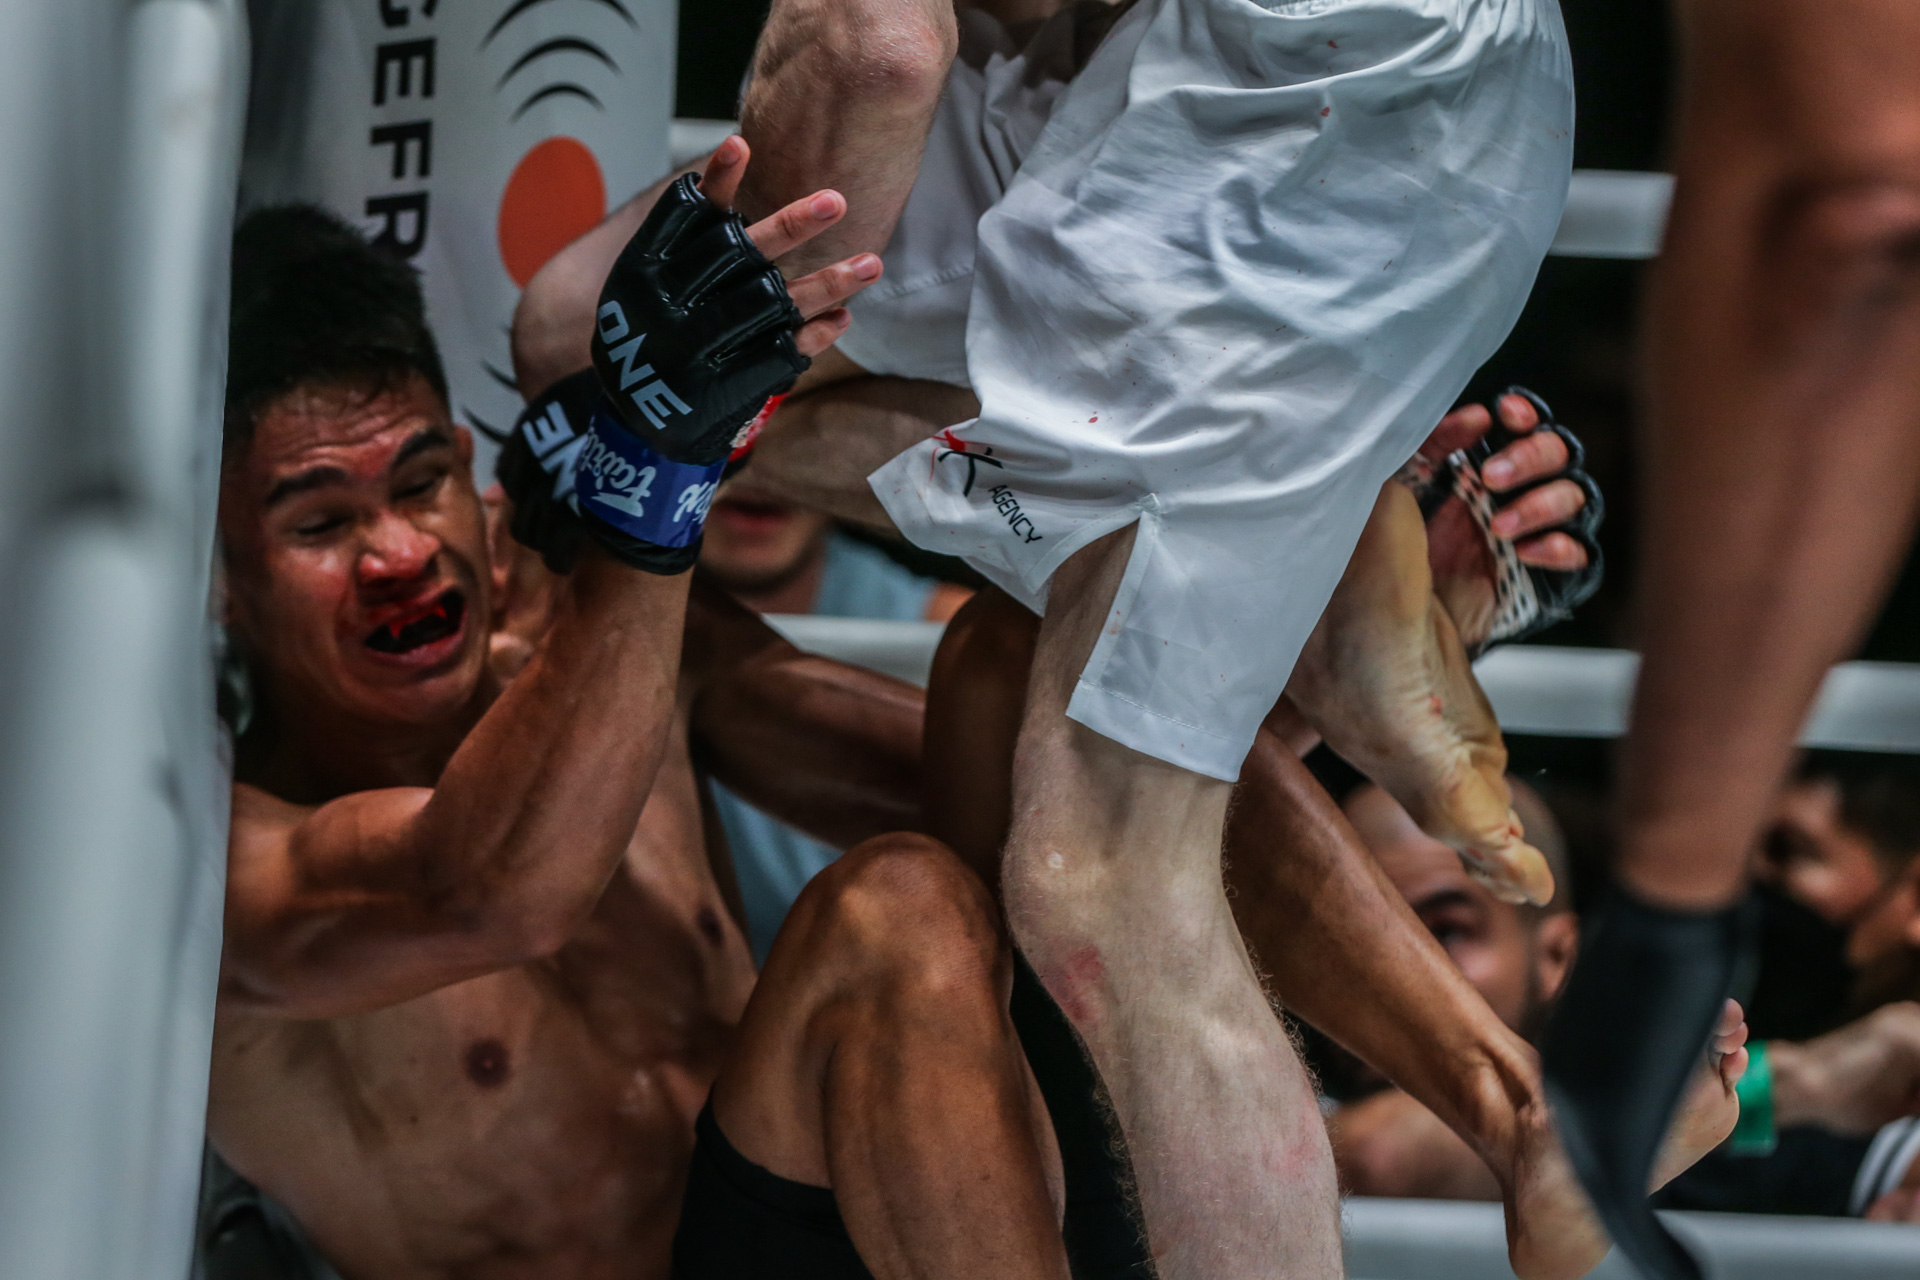 ONE-Fight-Night-11-Mansur-Malachiev-def-Jeremy-Miado-2 ONE: Jeremy Miado bows to Mansur Malachiev Mixed Martial Arts News ONE Championship  - philippine sports news